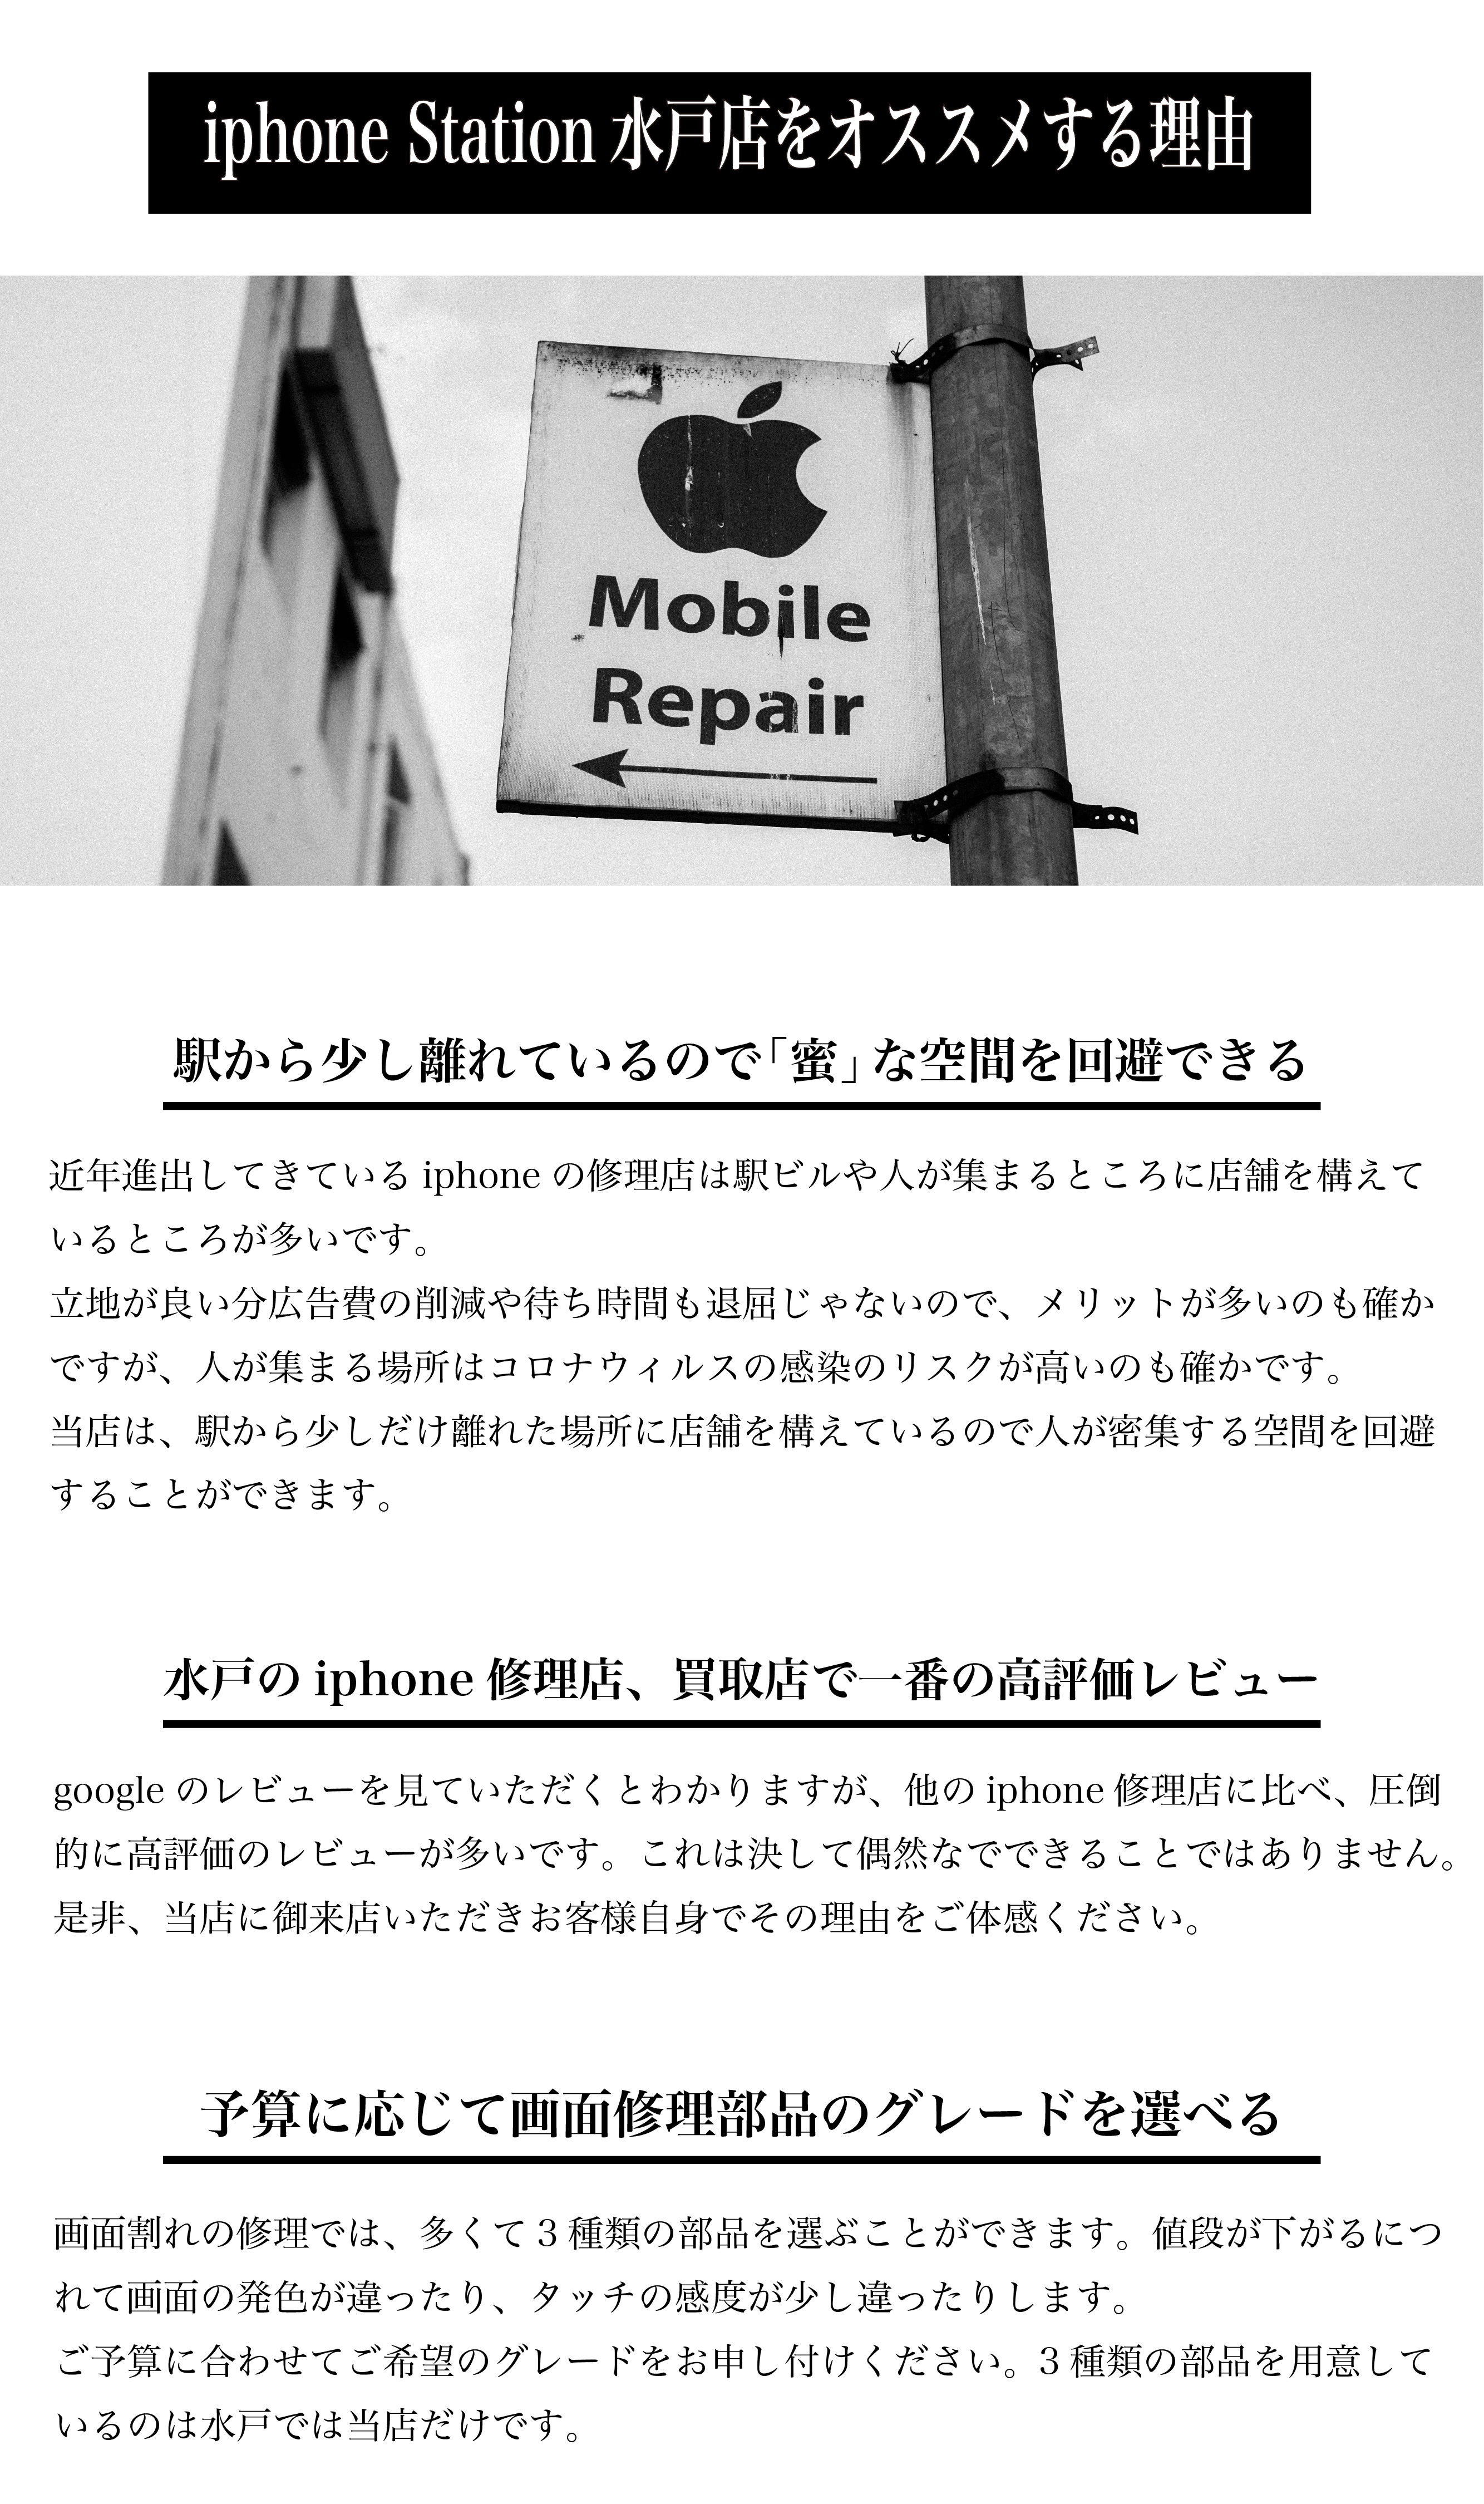 Iphoneステーション 水戸店 水戸のiphone修理店で一番の高レビュー数を獲得